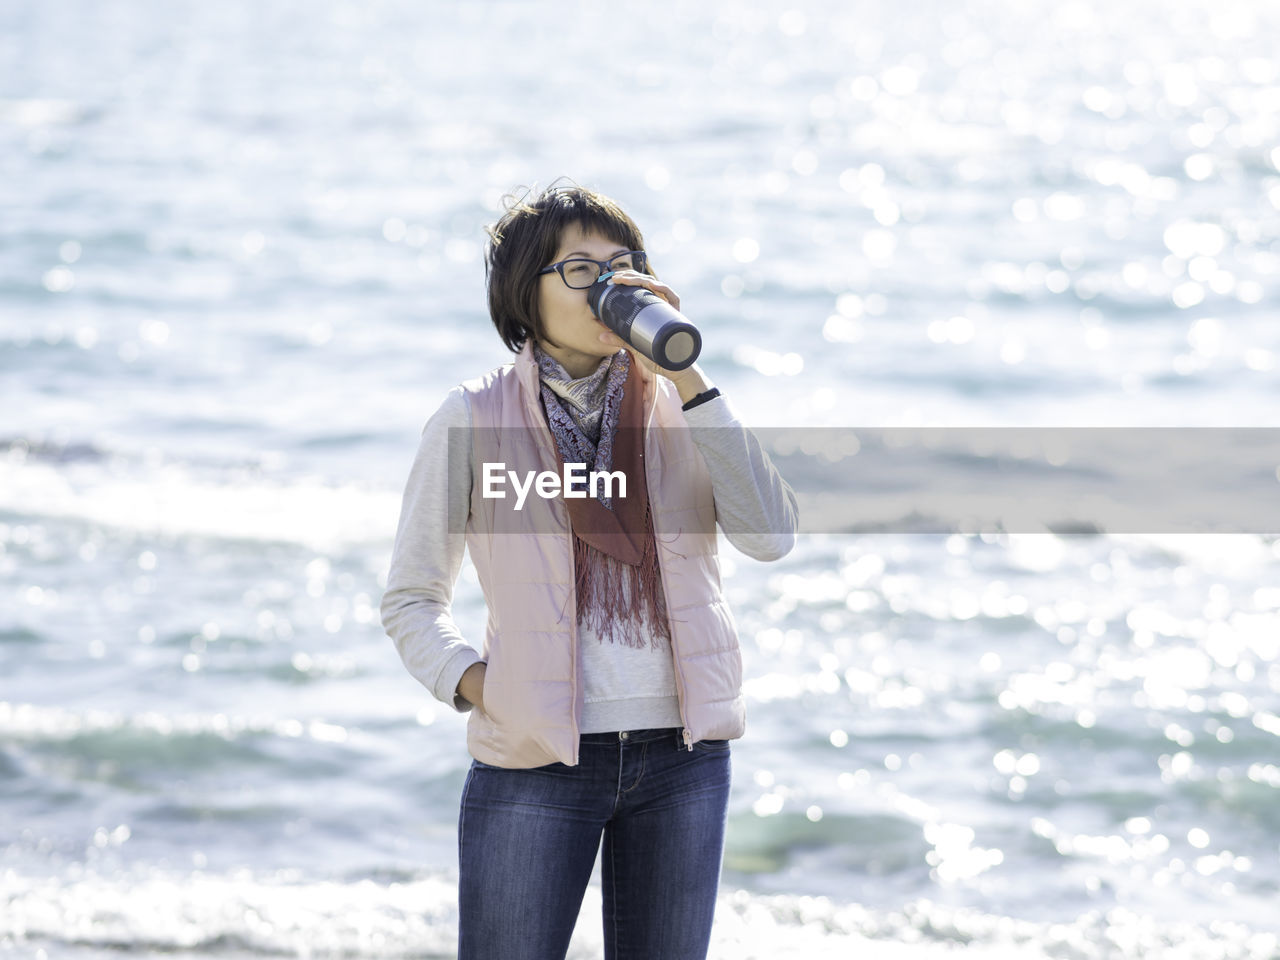 Woman drinks hot tea from metal travel mug. vacation on ocean coast. turquoise water behind woman.